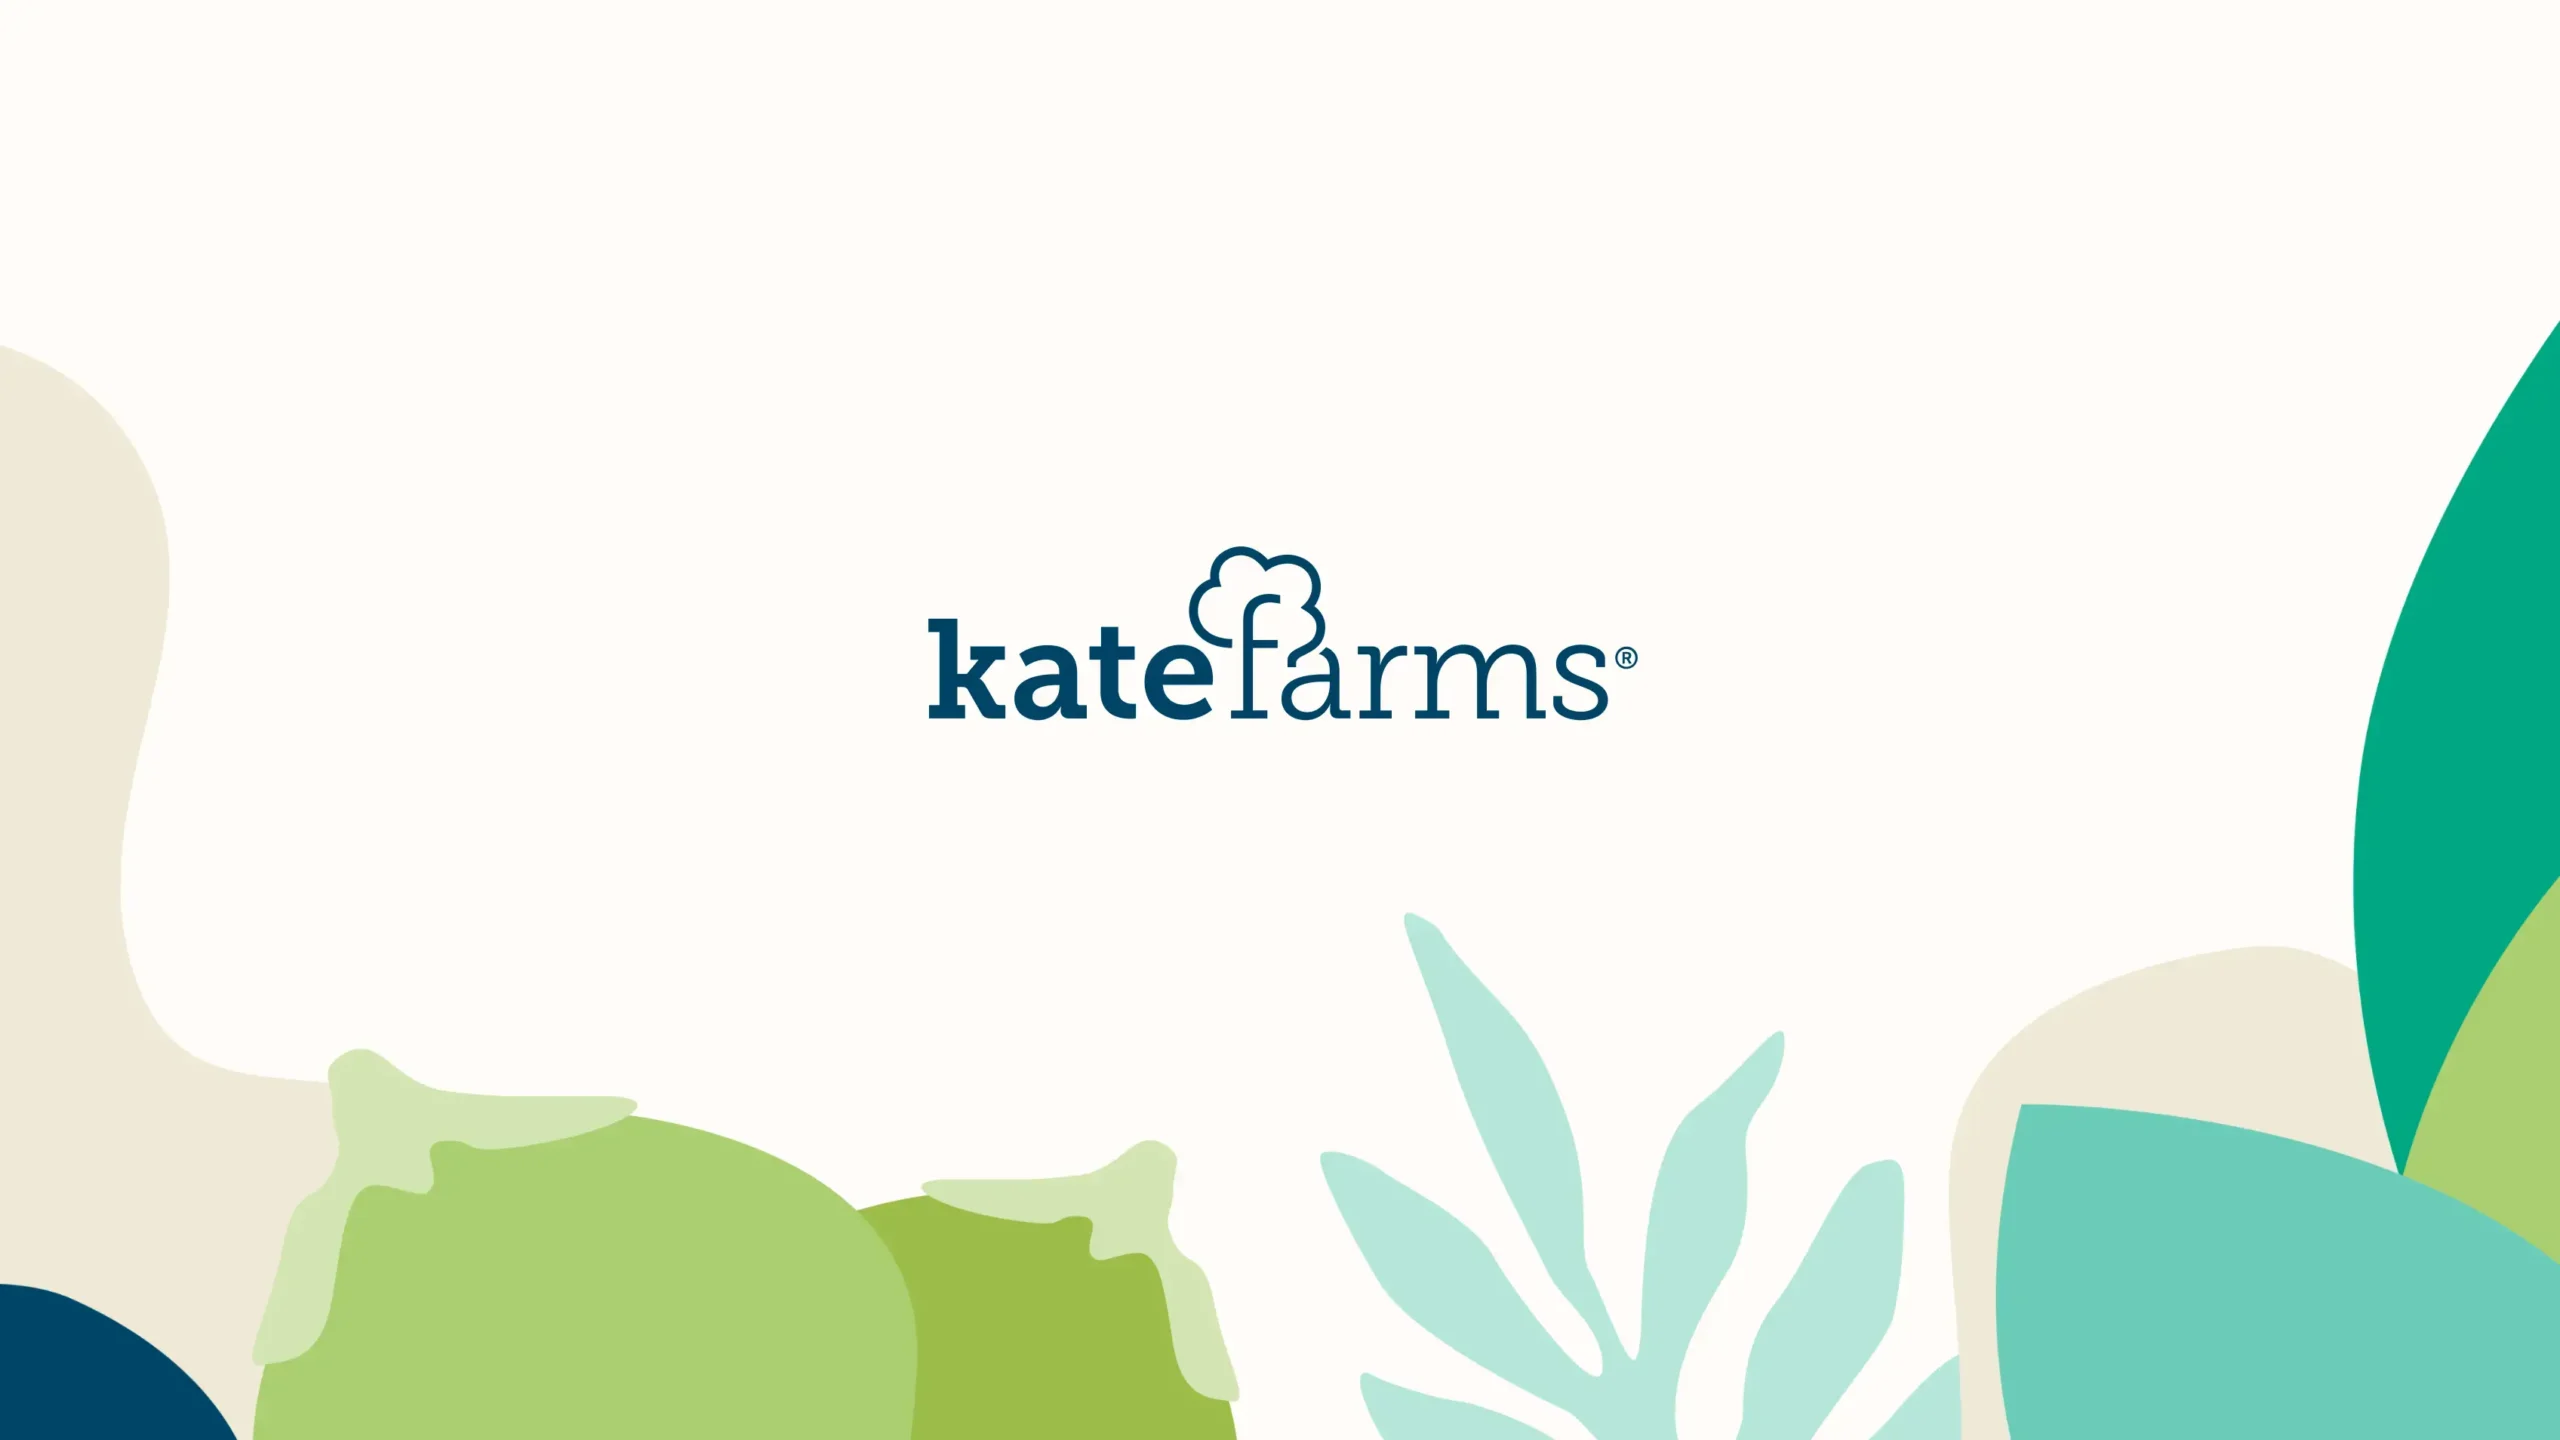 Kate Farms advertising